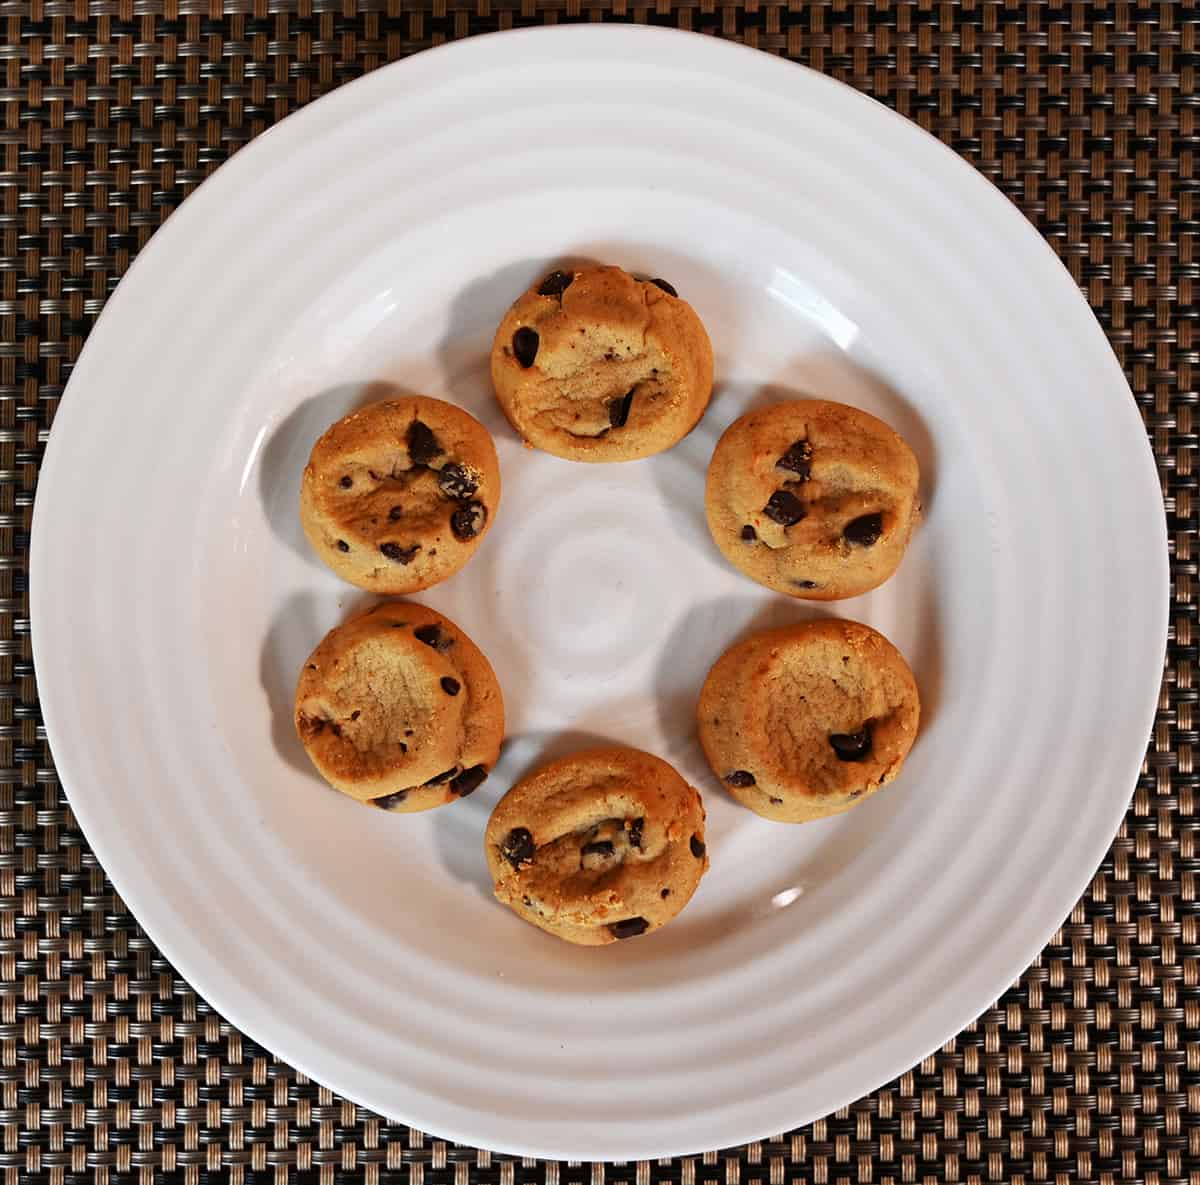 Image of six mini chocolate chip cookies arranged 